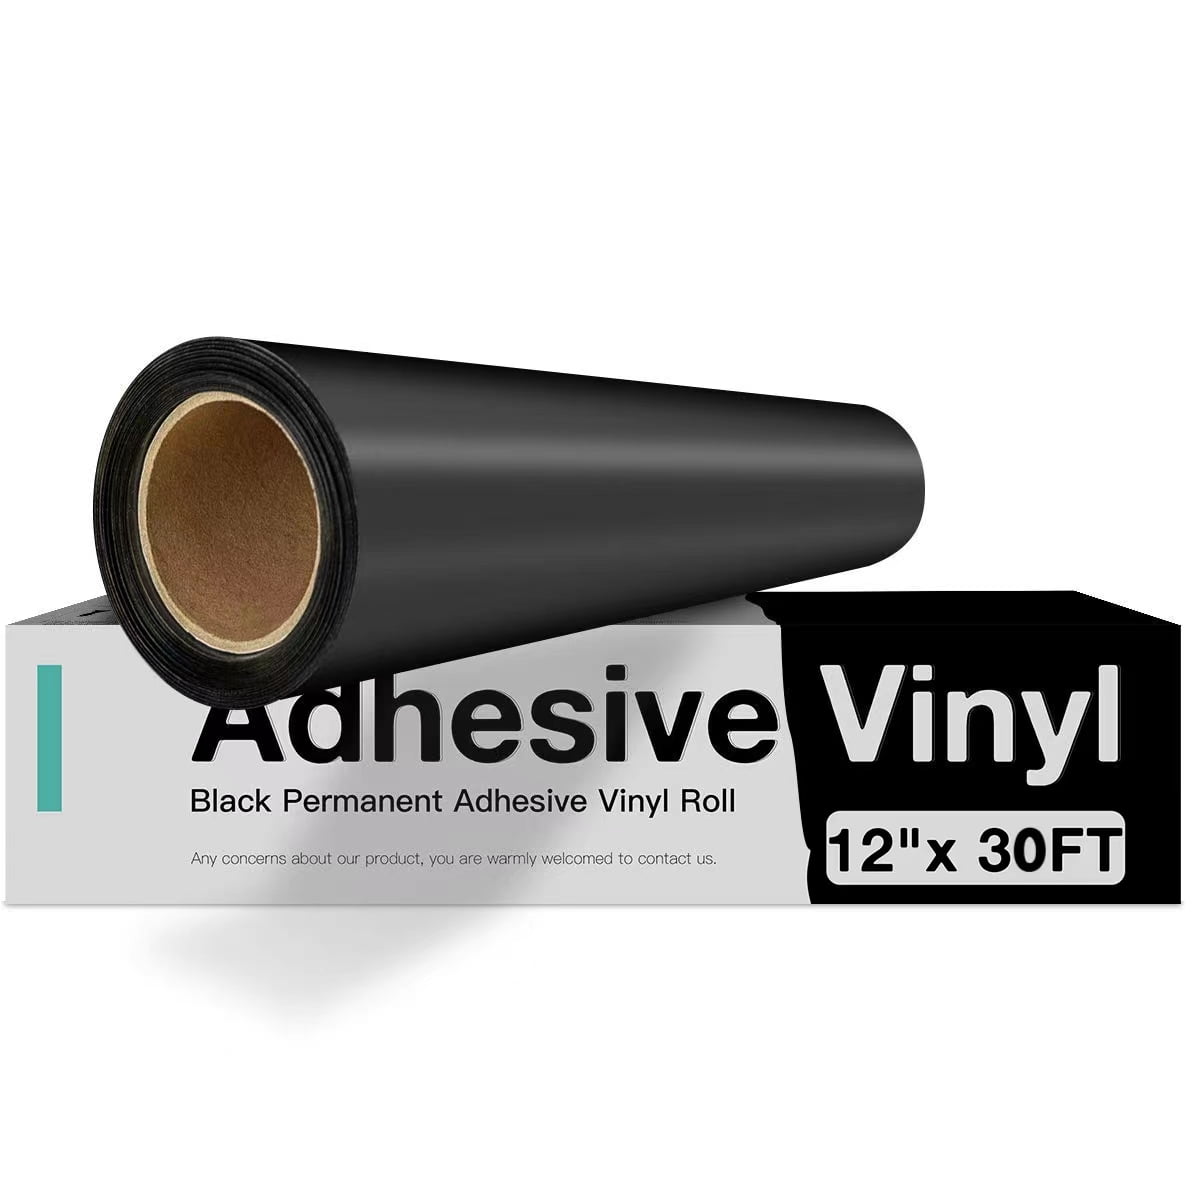 CAREGY Black Permanent Vinyl, Matte Black Adhesive Vinyl for Cricut - 12 x  60FT Black Permanent Vinyl Roll for Cutting Machine,Signs, Home